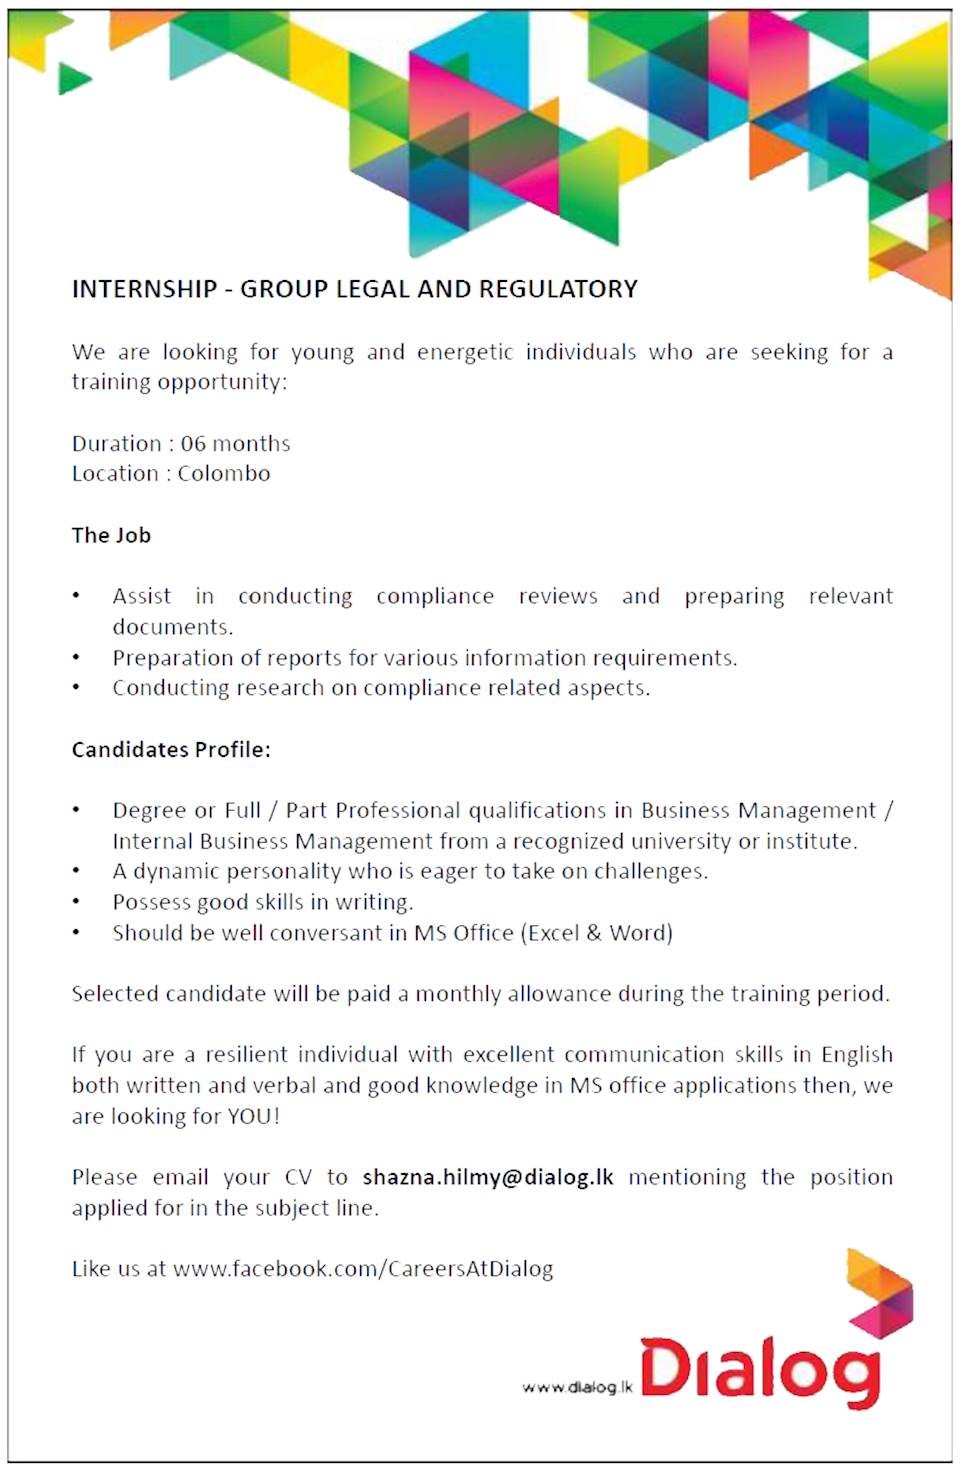 Internship - Group Legal and Regulatory